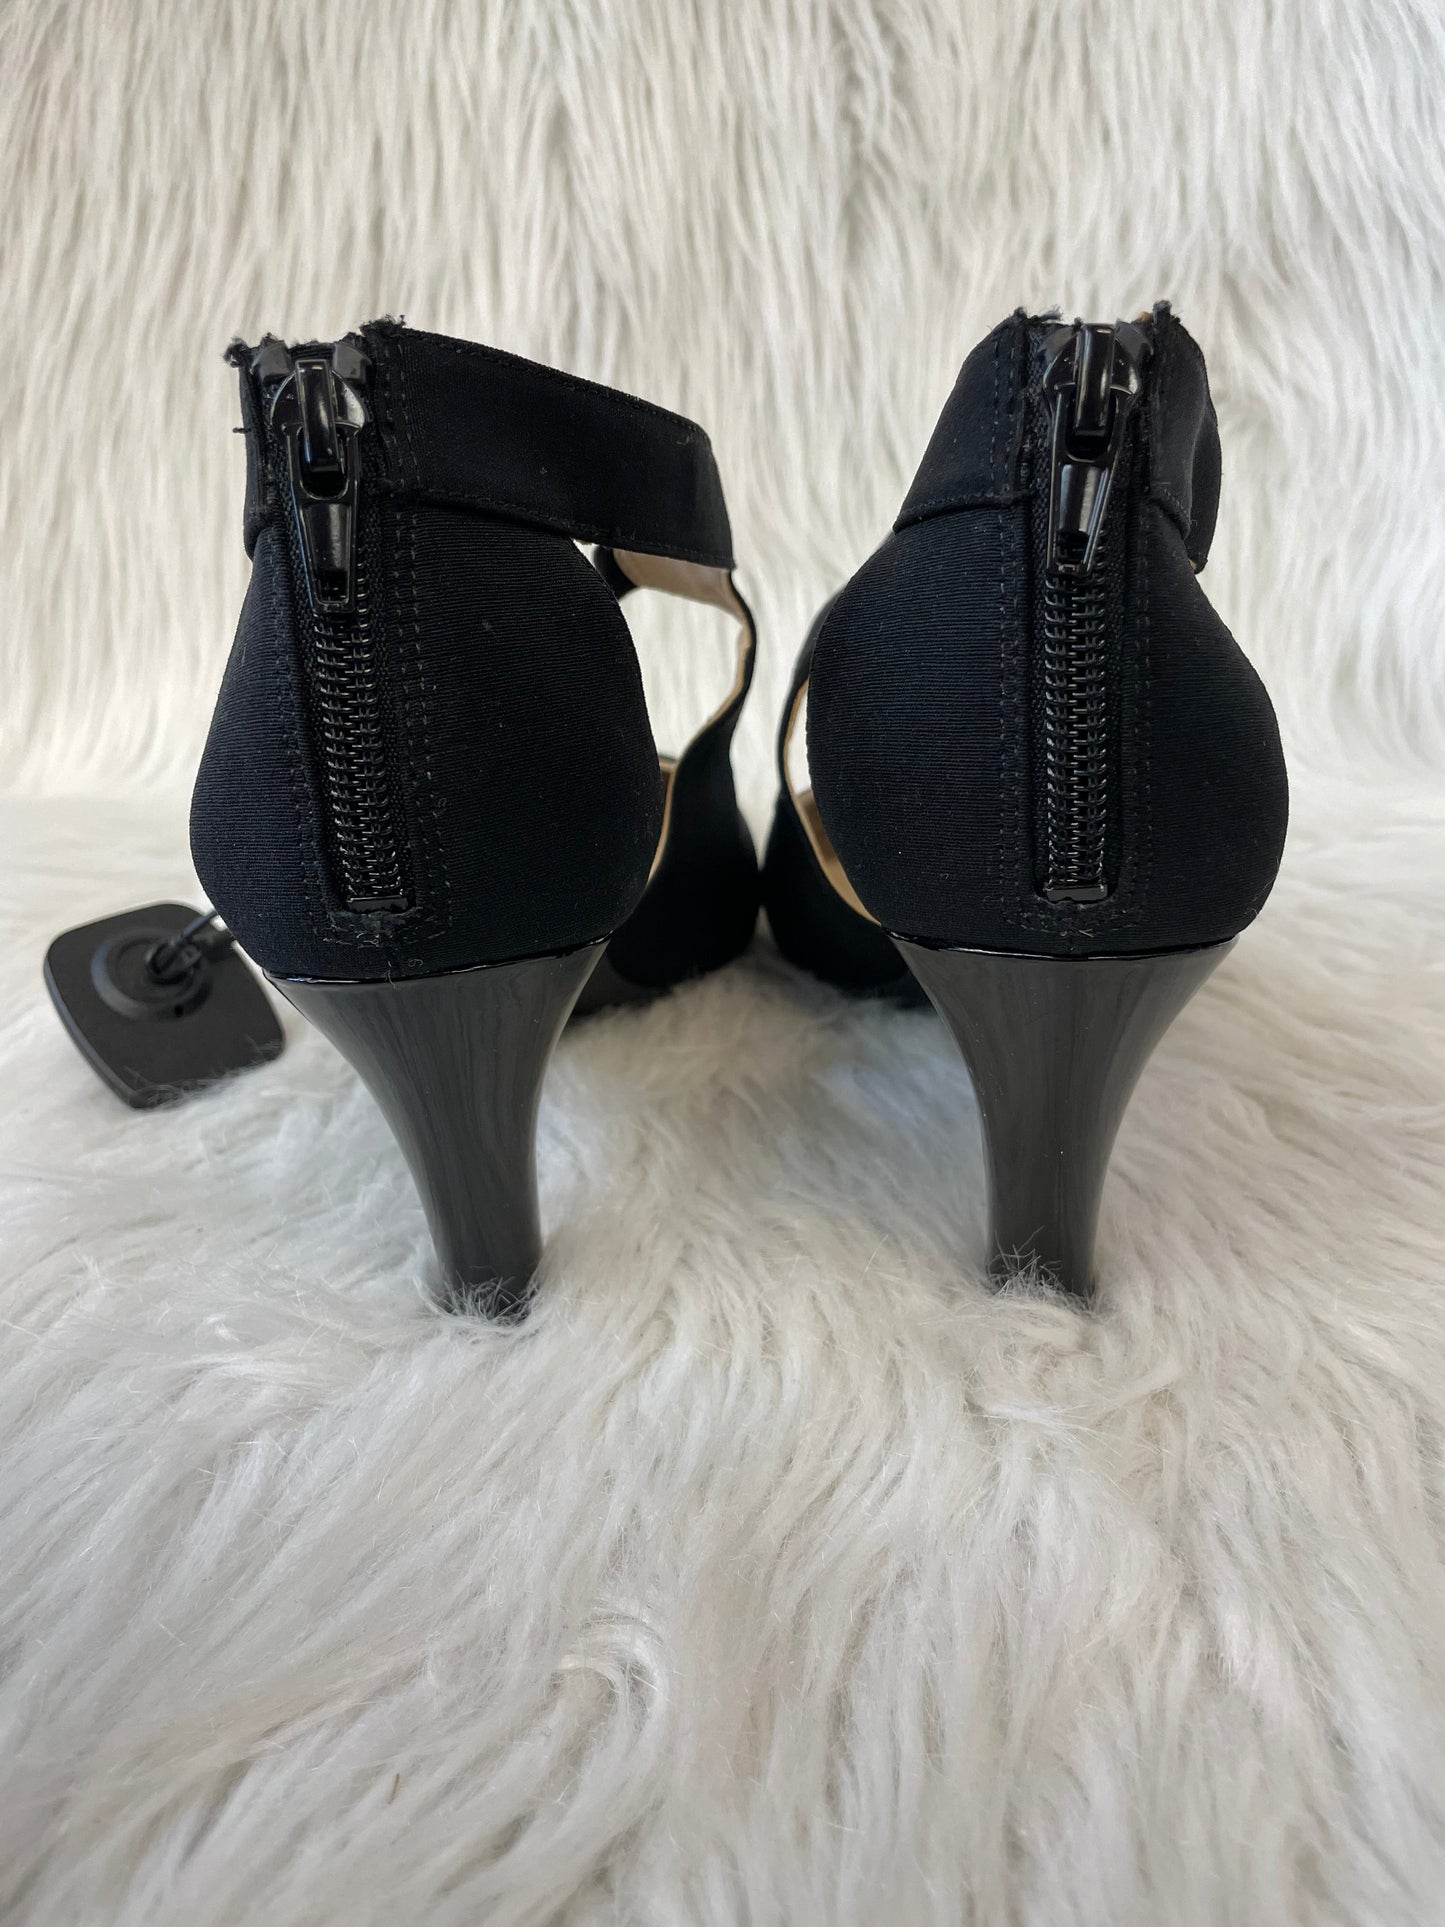 Black Shoes Heels Block Life Stride, Size 8.5